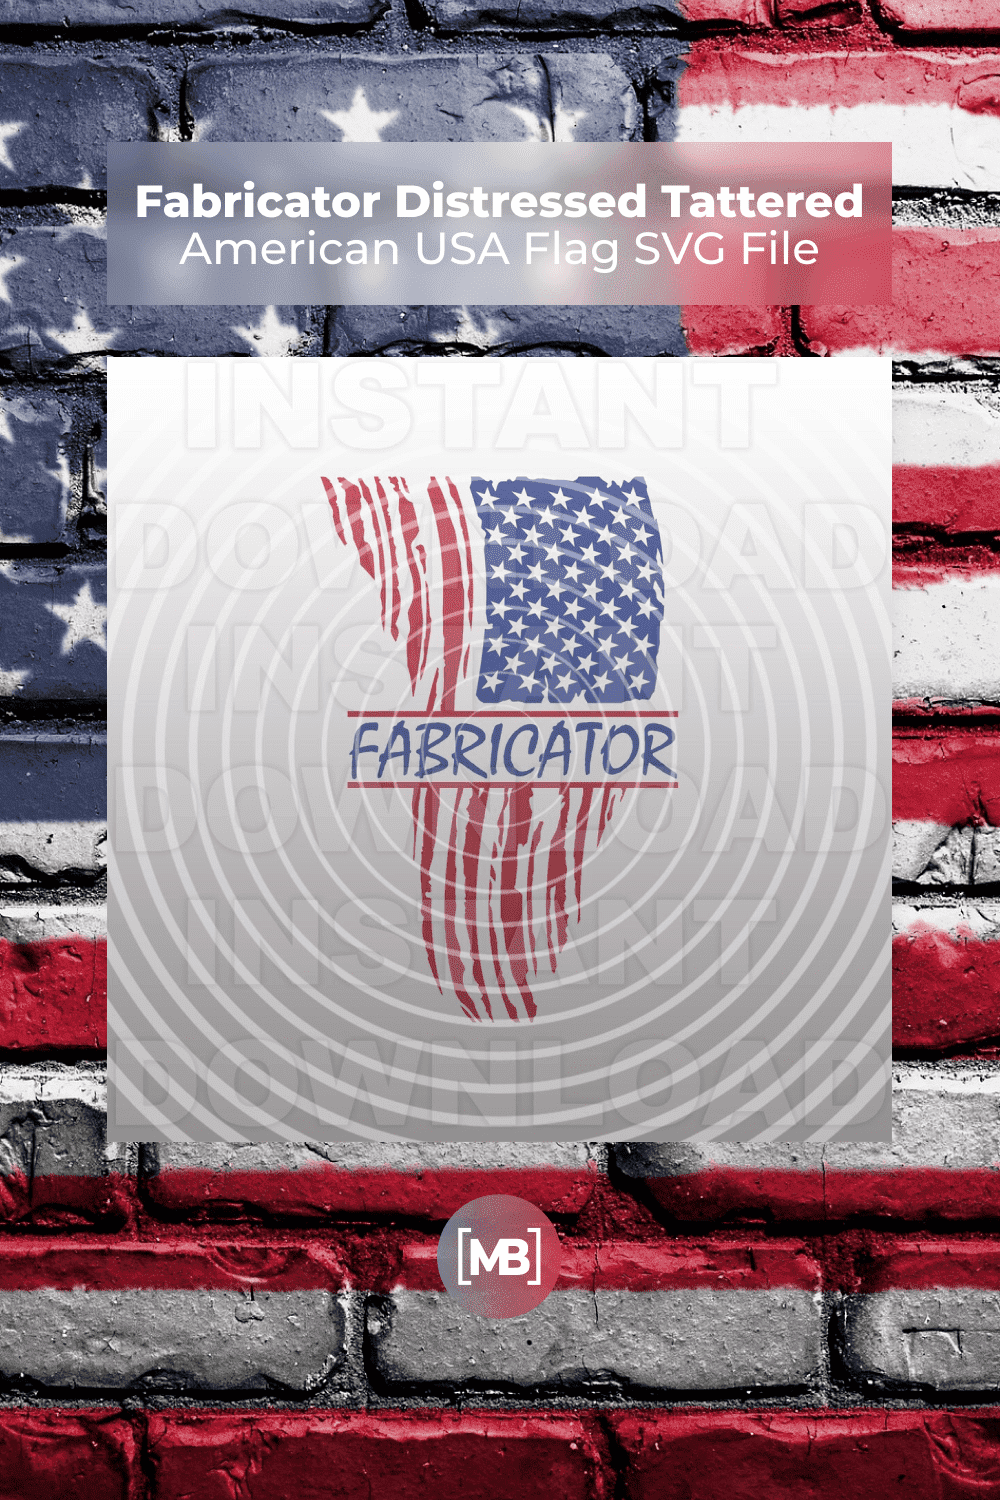 Fabricator Distressed Tattered American USA Flag SVG File.